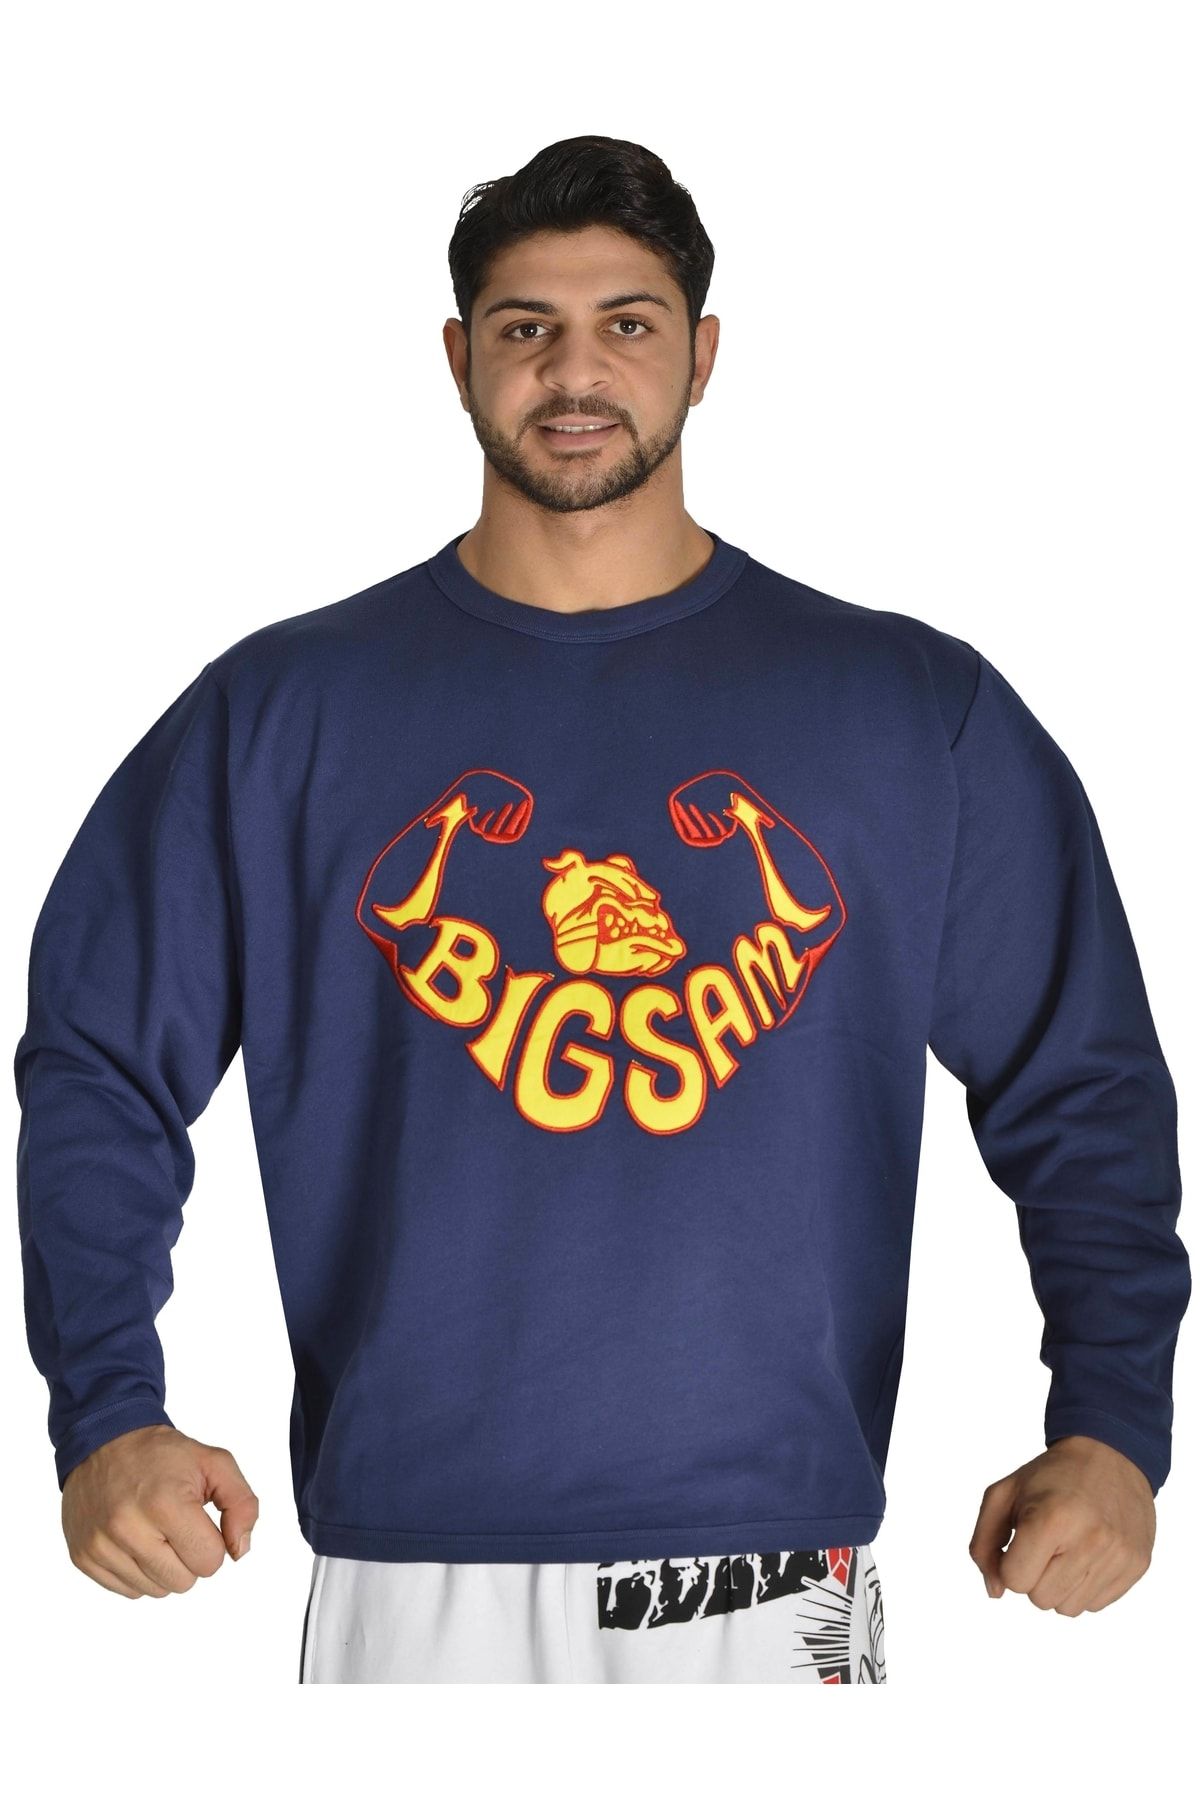 Big Sam Oversize Bodybuilding Sweatshirt